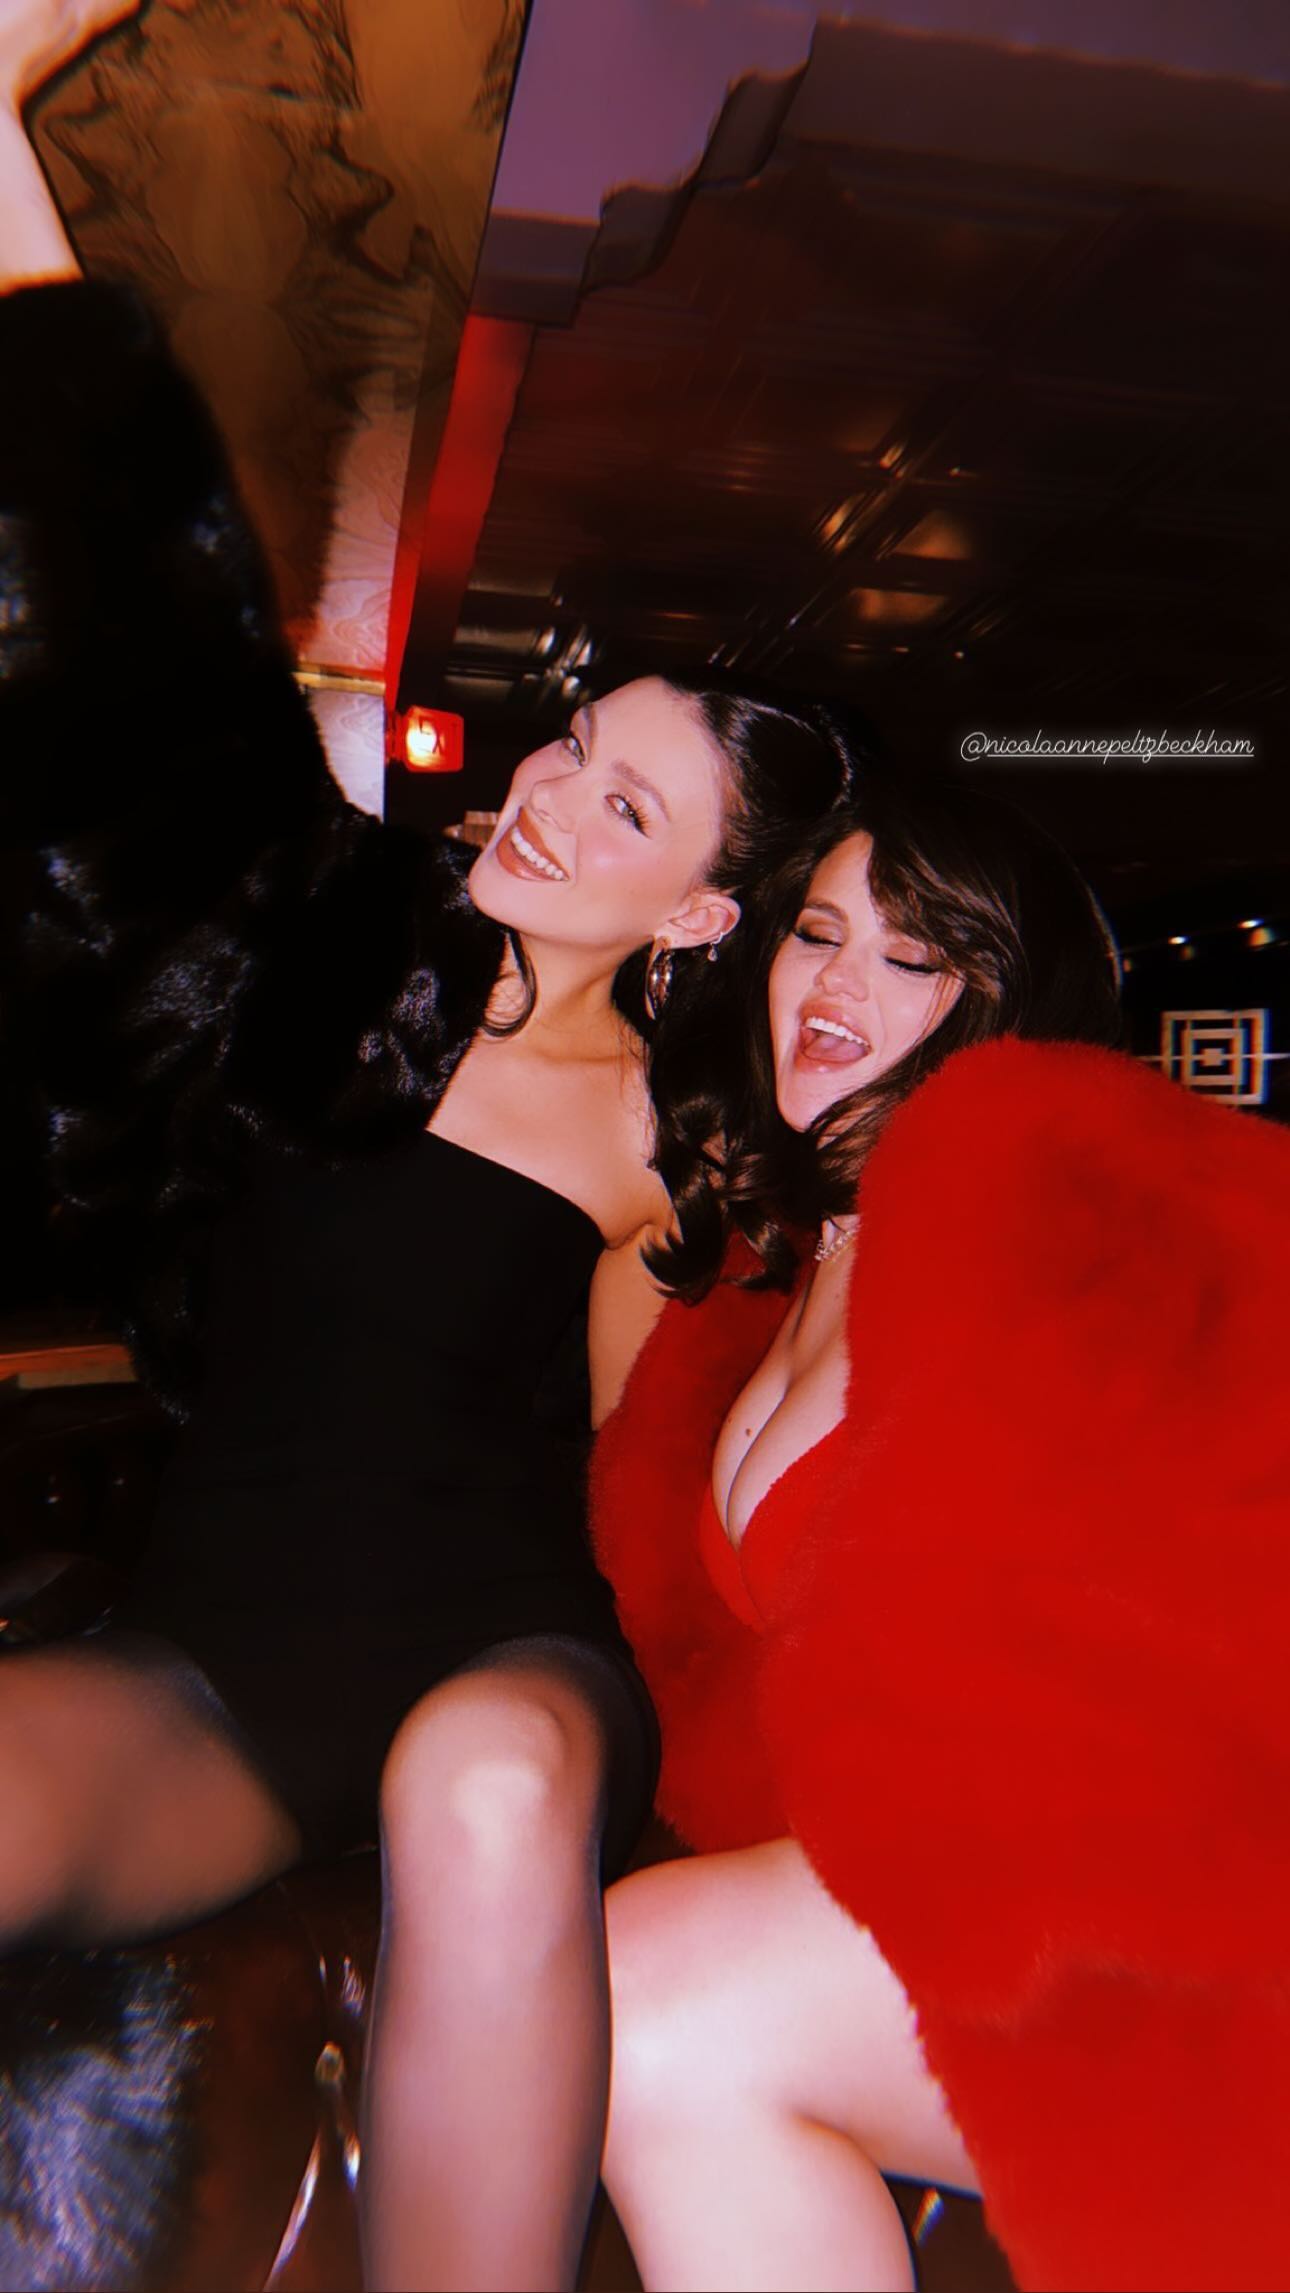 Photos n°5 : Selena Gomez Celebrates in a Red Dress!